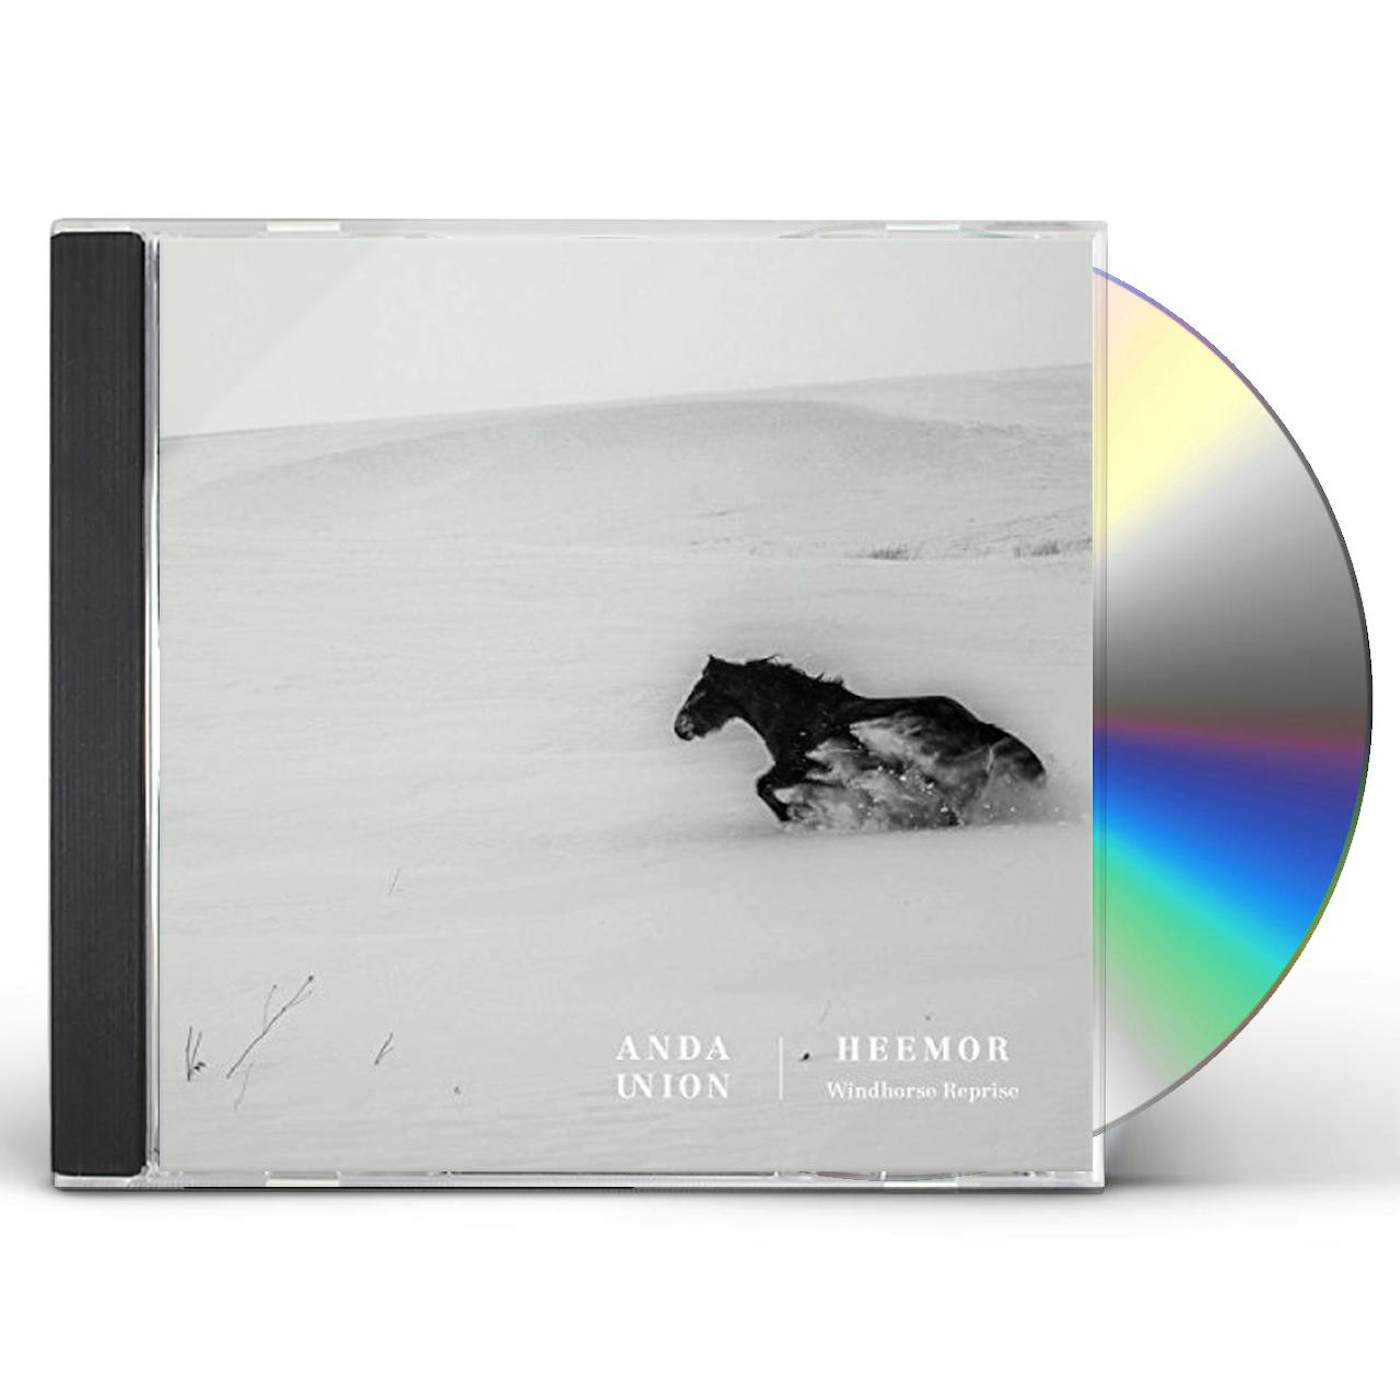 Anda Union HEEMOR: WINDHORSE REPRISE CD